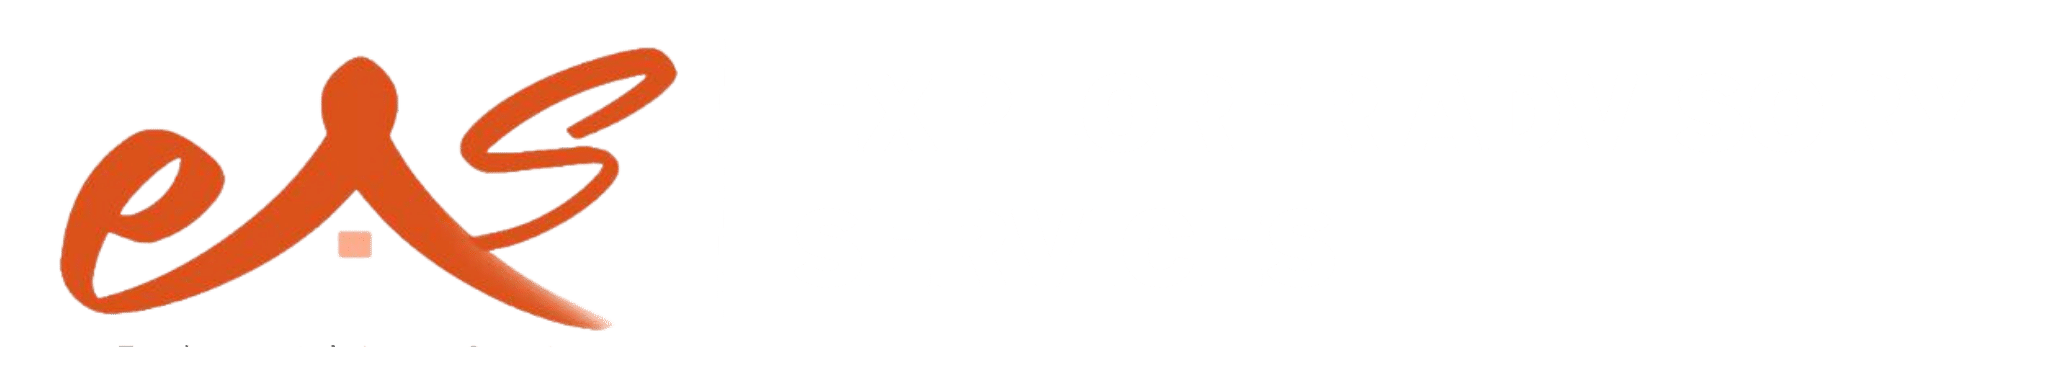 Explorer Advisory Services